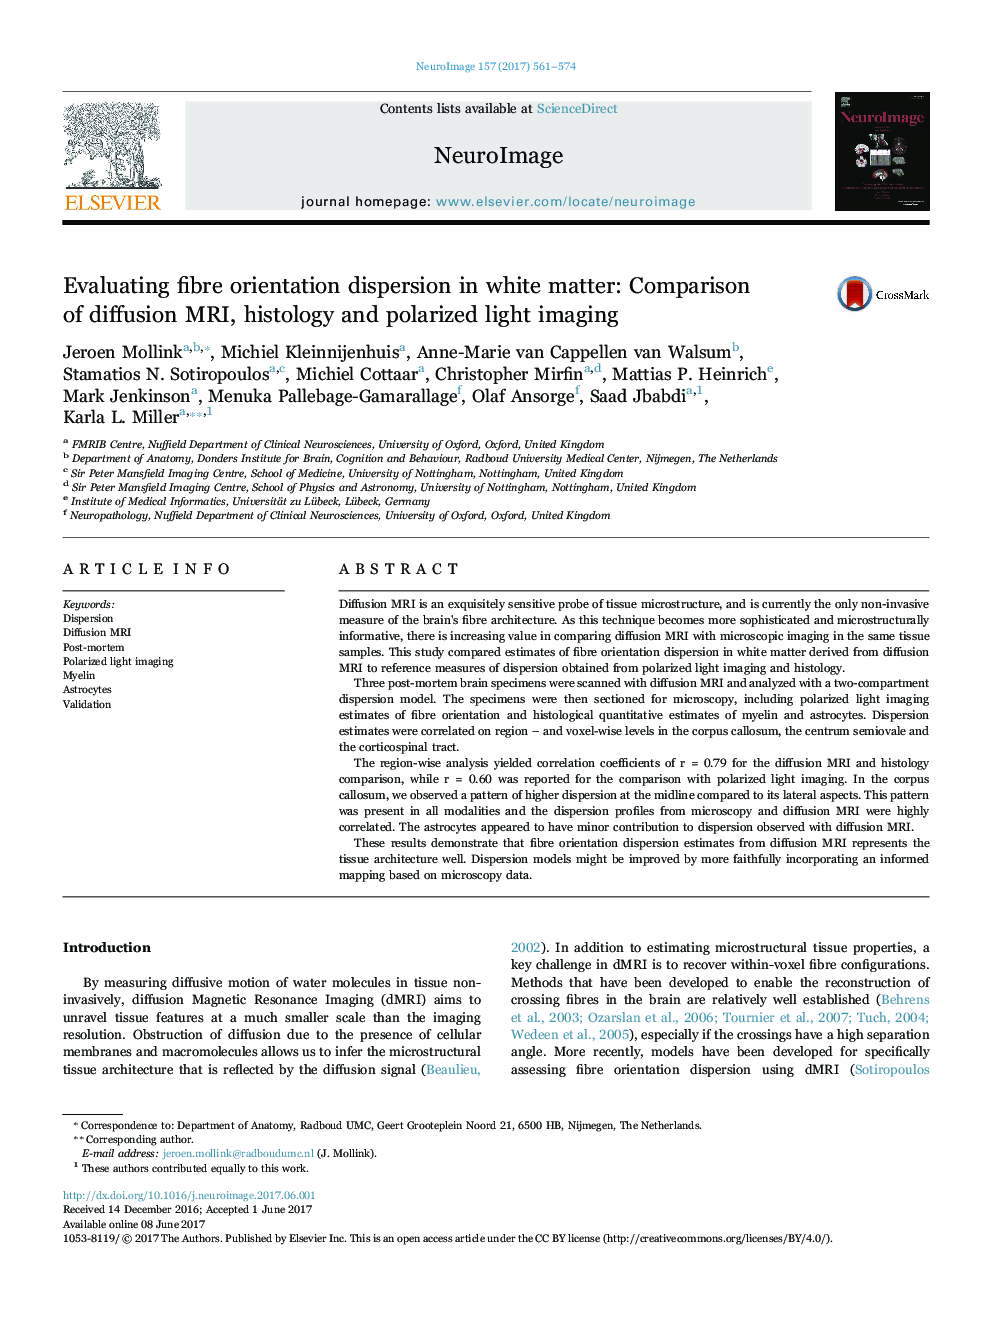 Evaluating fibre orientation dispersion in white matter: Comparison of diffusion MRI, histology and polarized light imaging